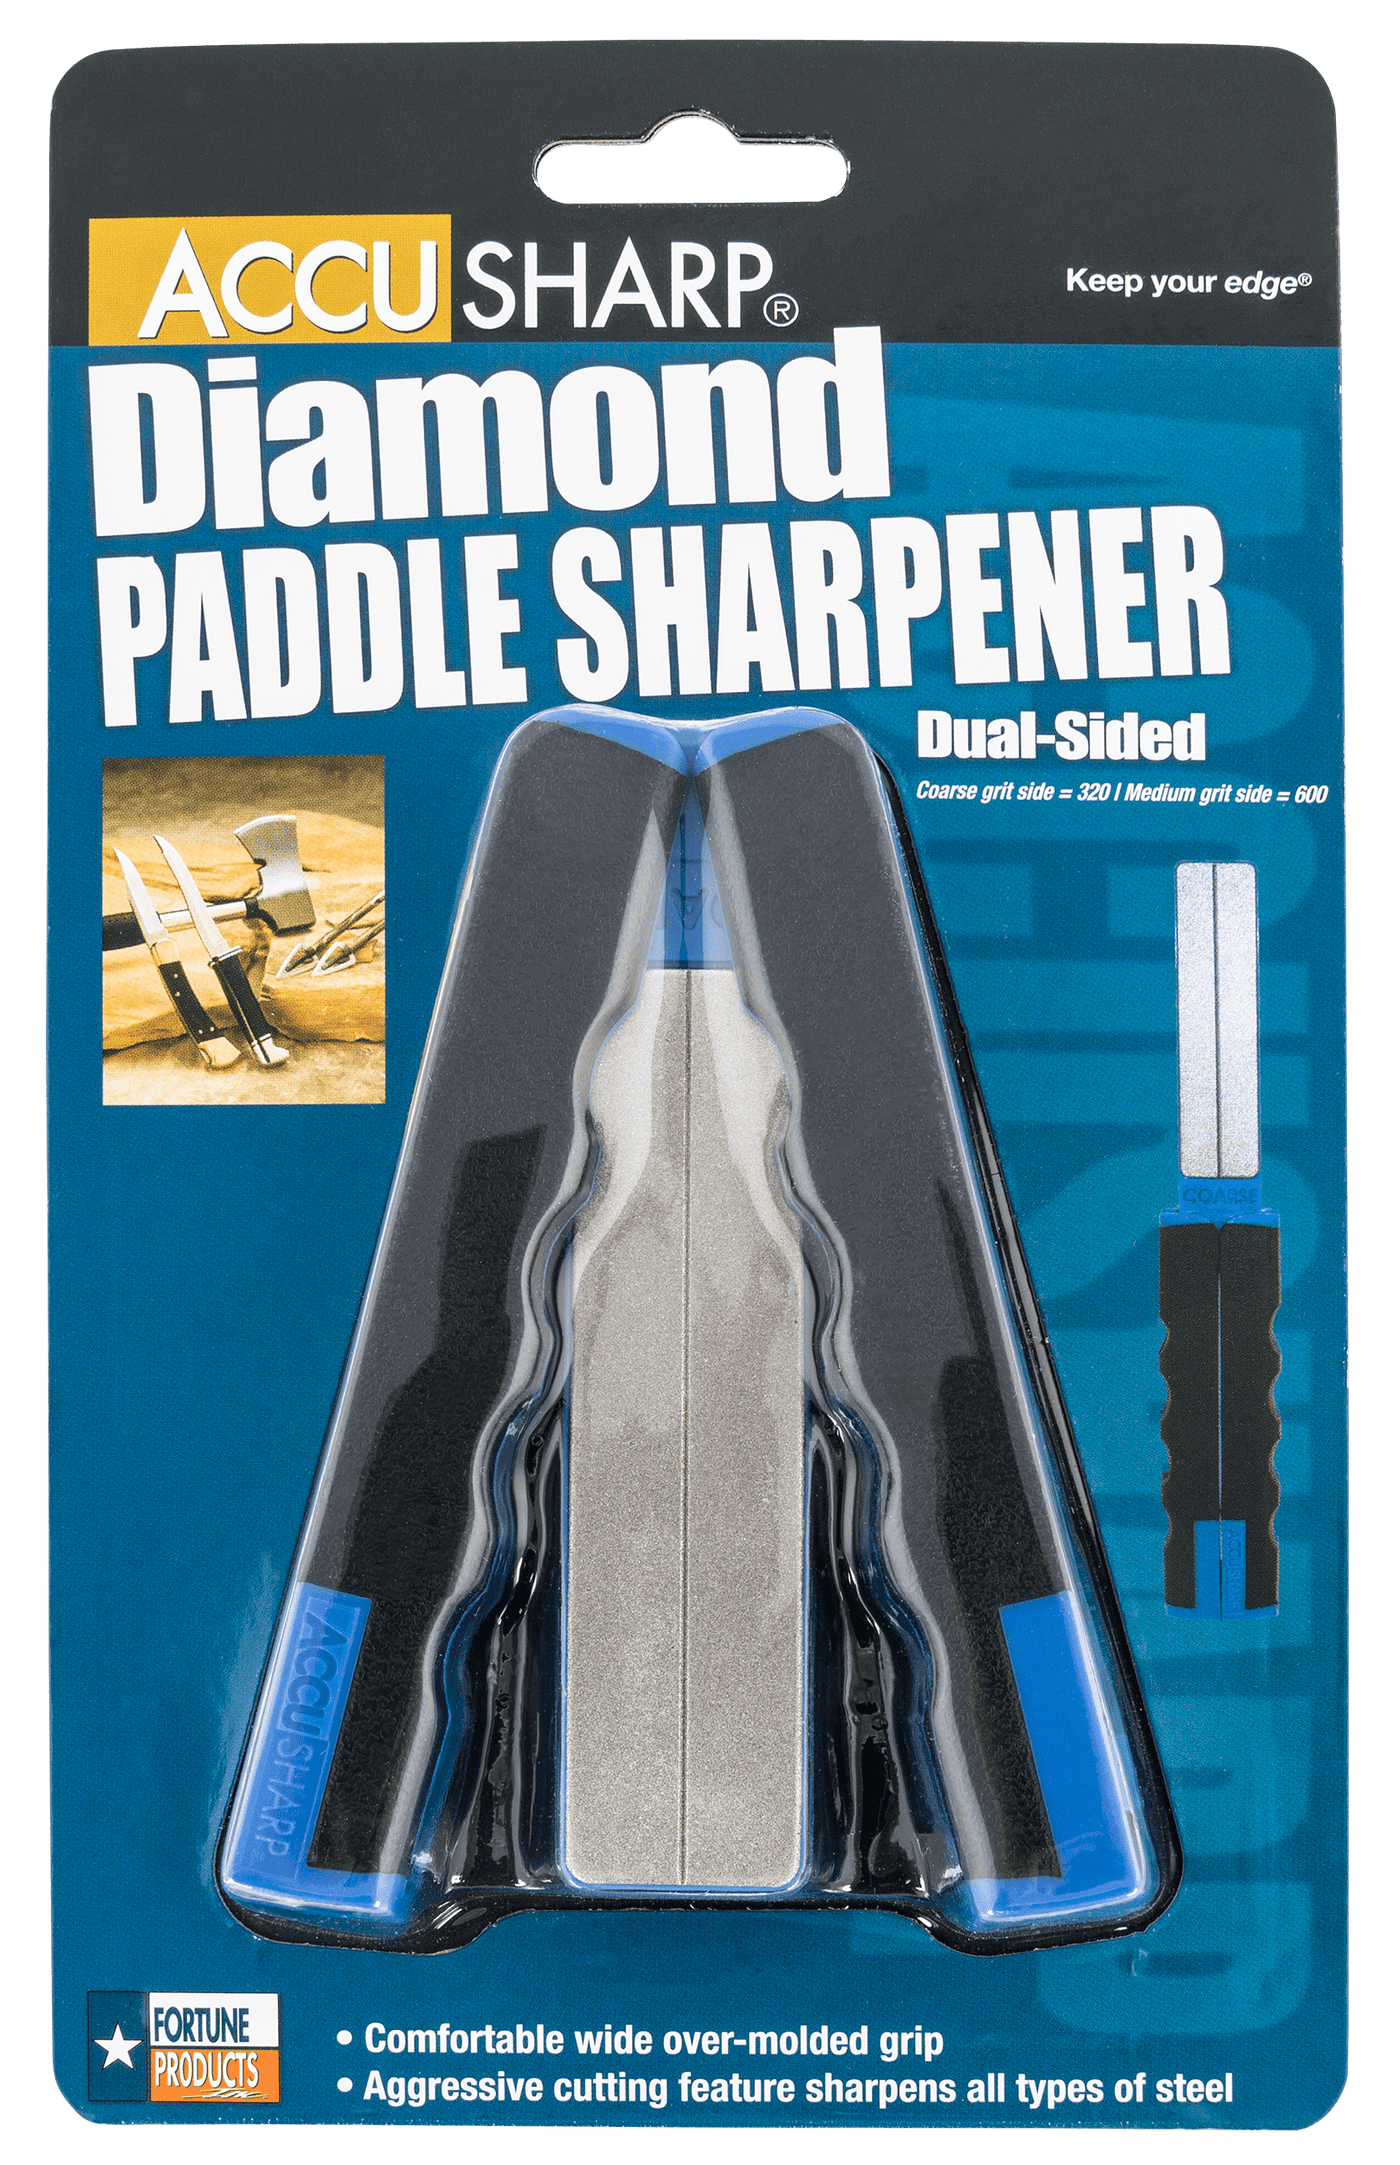 Accusharp Accusharp Diamond, Fpi 051c  Accusharp Diamond Paddle Sharpener Accessories